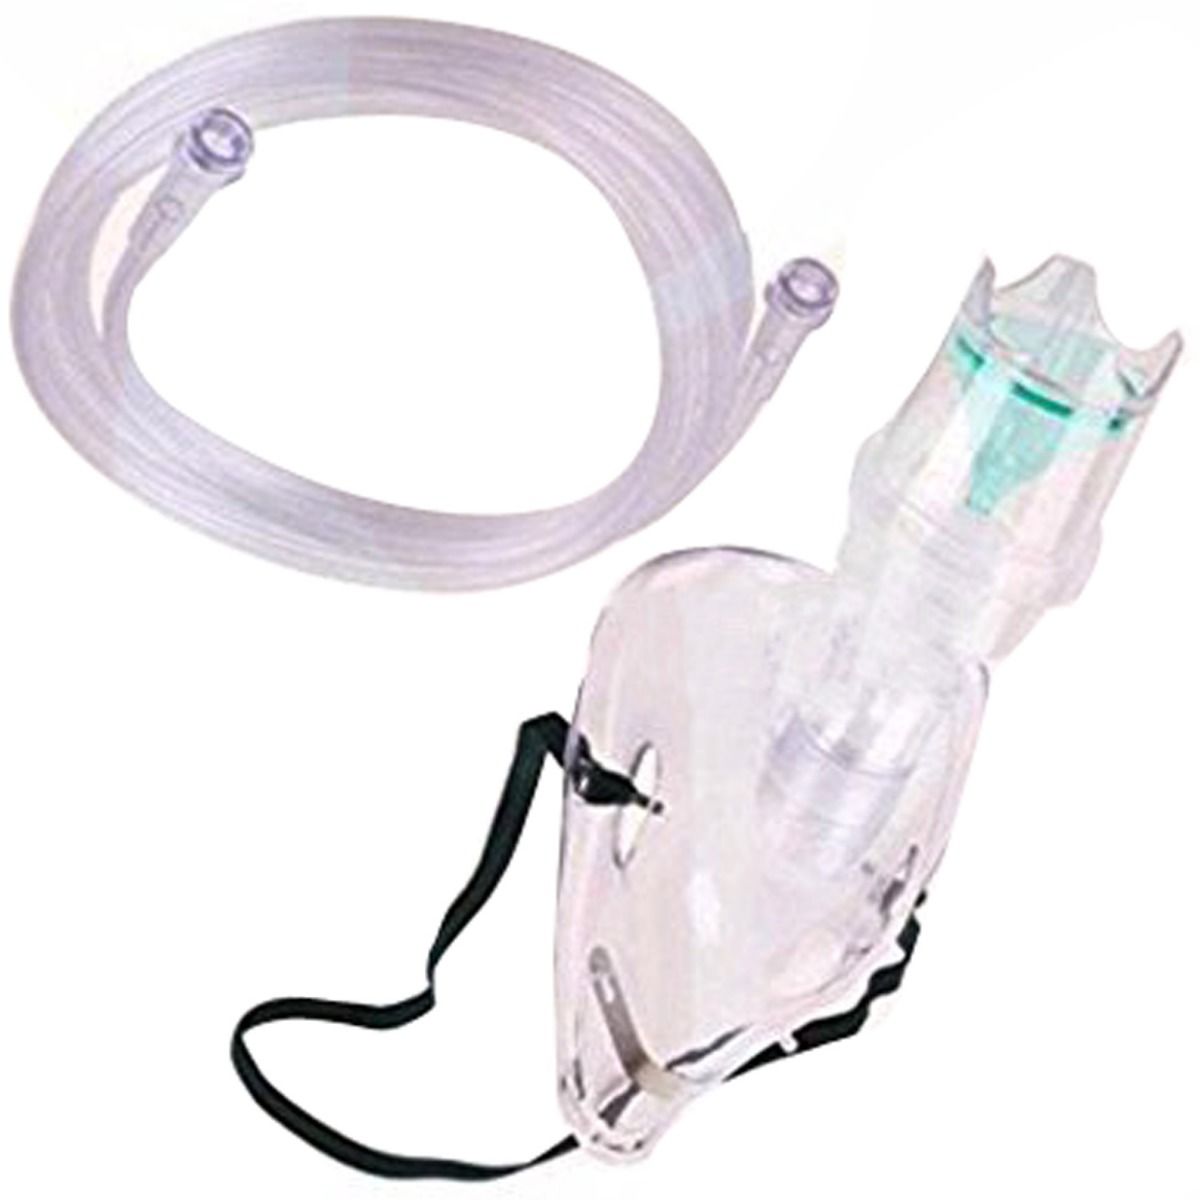 Buy Nebulizer Kit Ped Mask Online